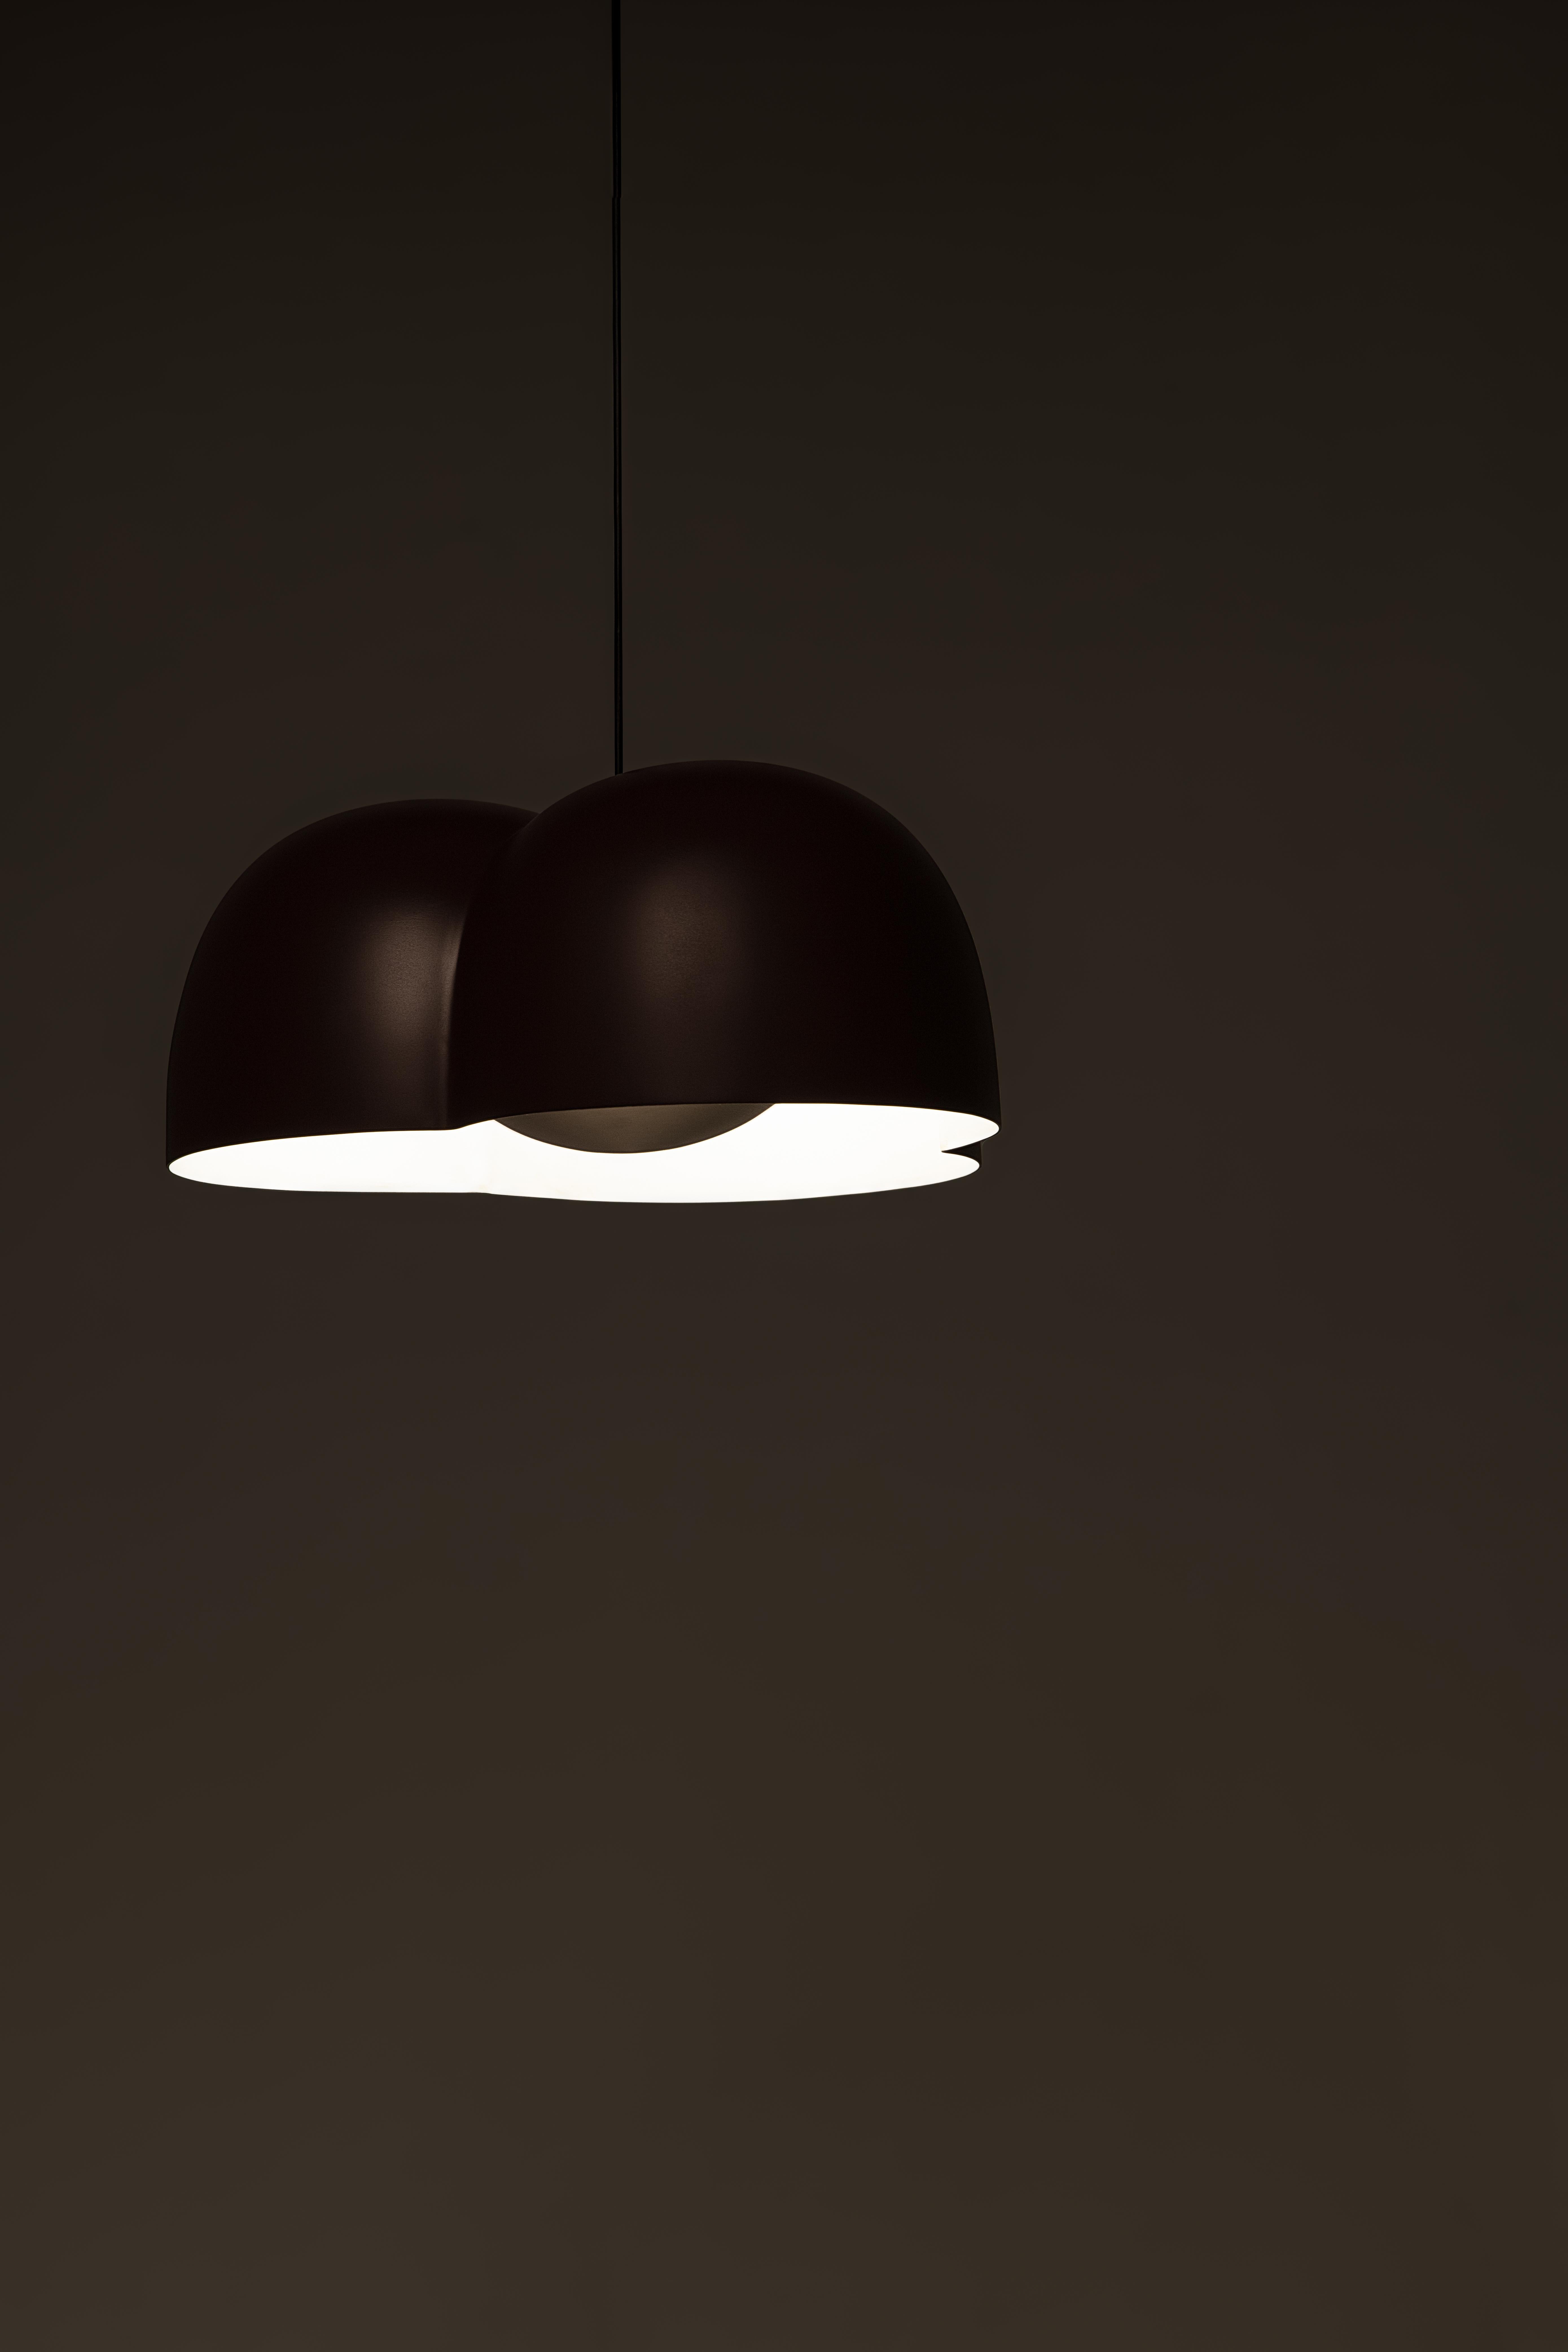 Korean Contemporary Pendant Lamp 'Cotton' by Sebastian Herkner x Ago, Small, Charcoal  For Sale